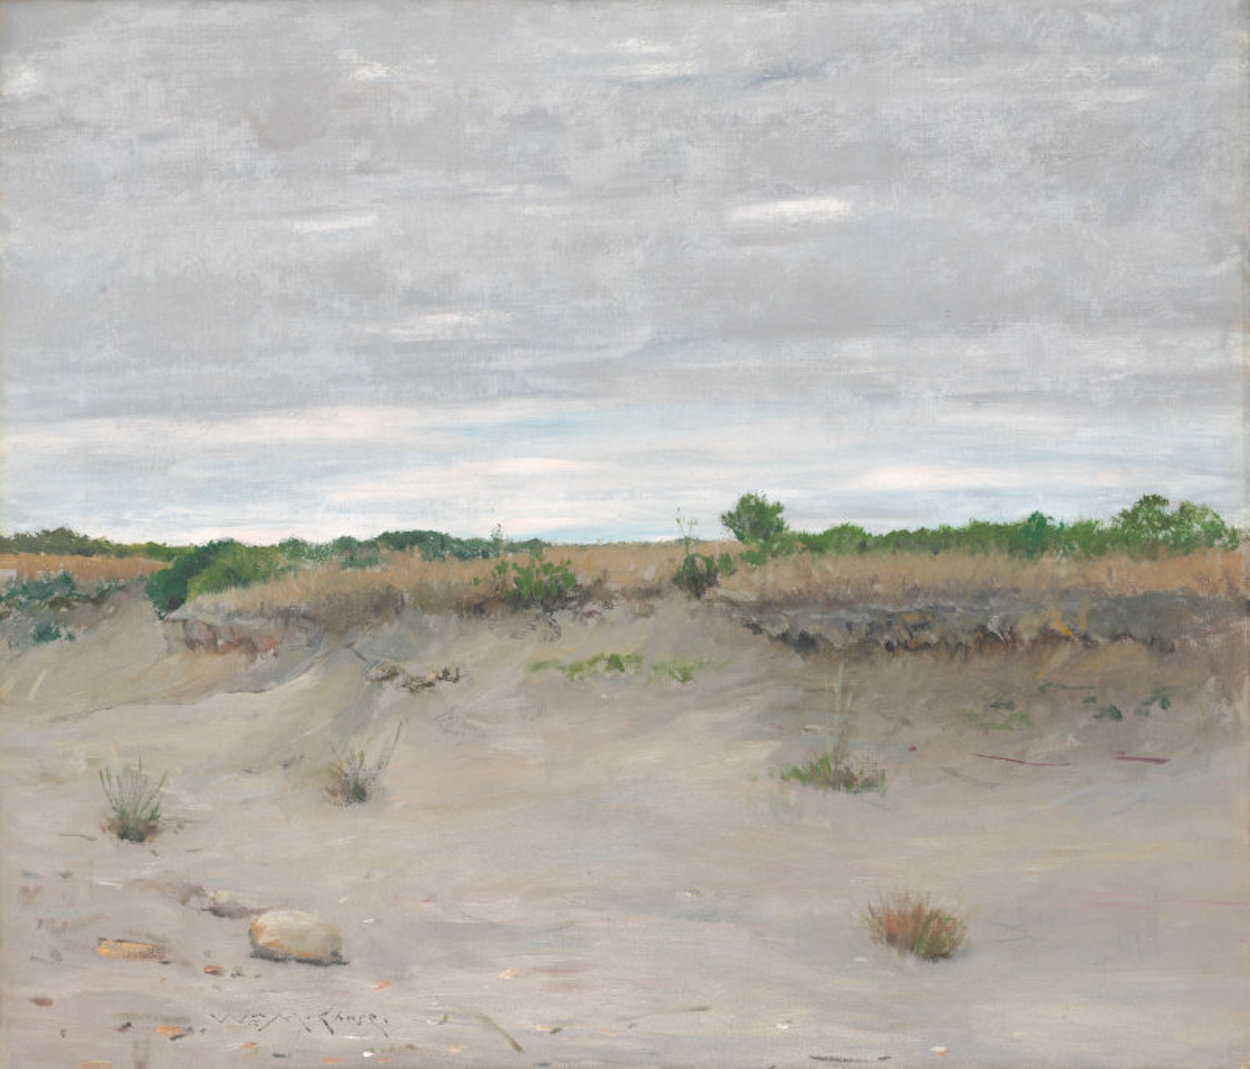 Nisipuri spulberate de vânt  by William Merritt Chase  - 1894 - 87 x 101.5 cm 